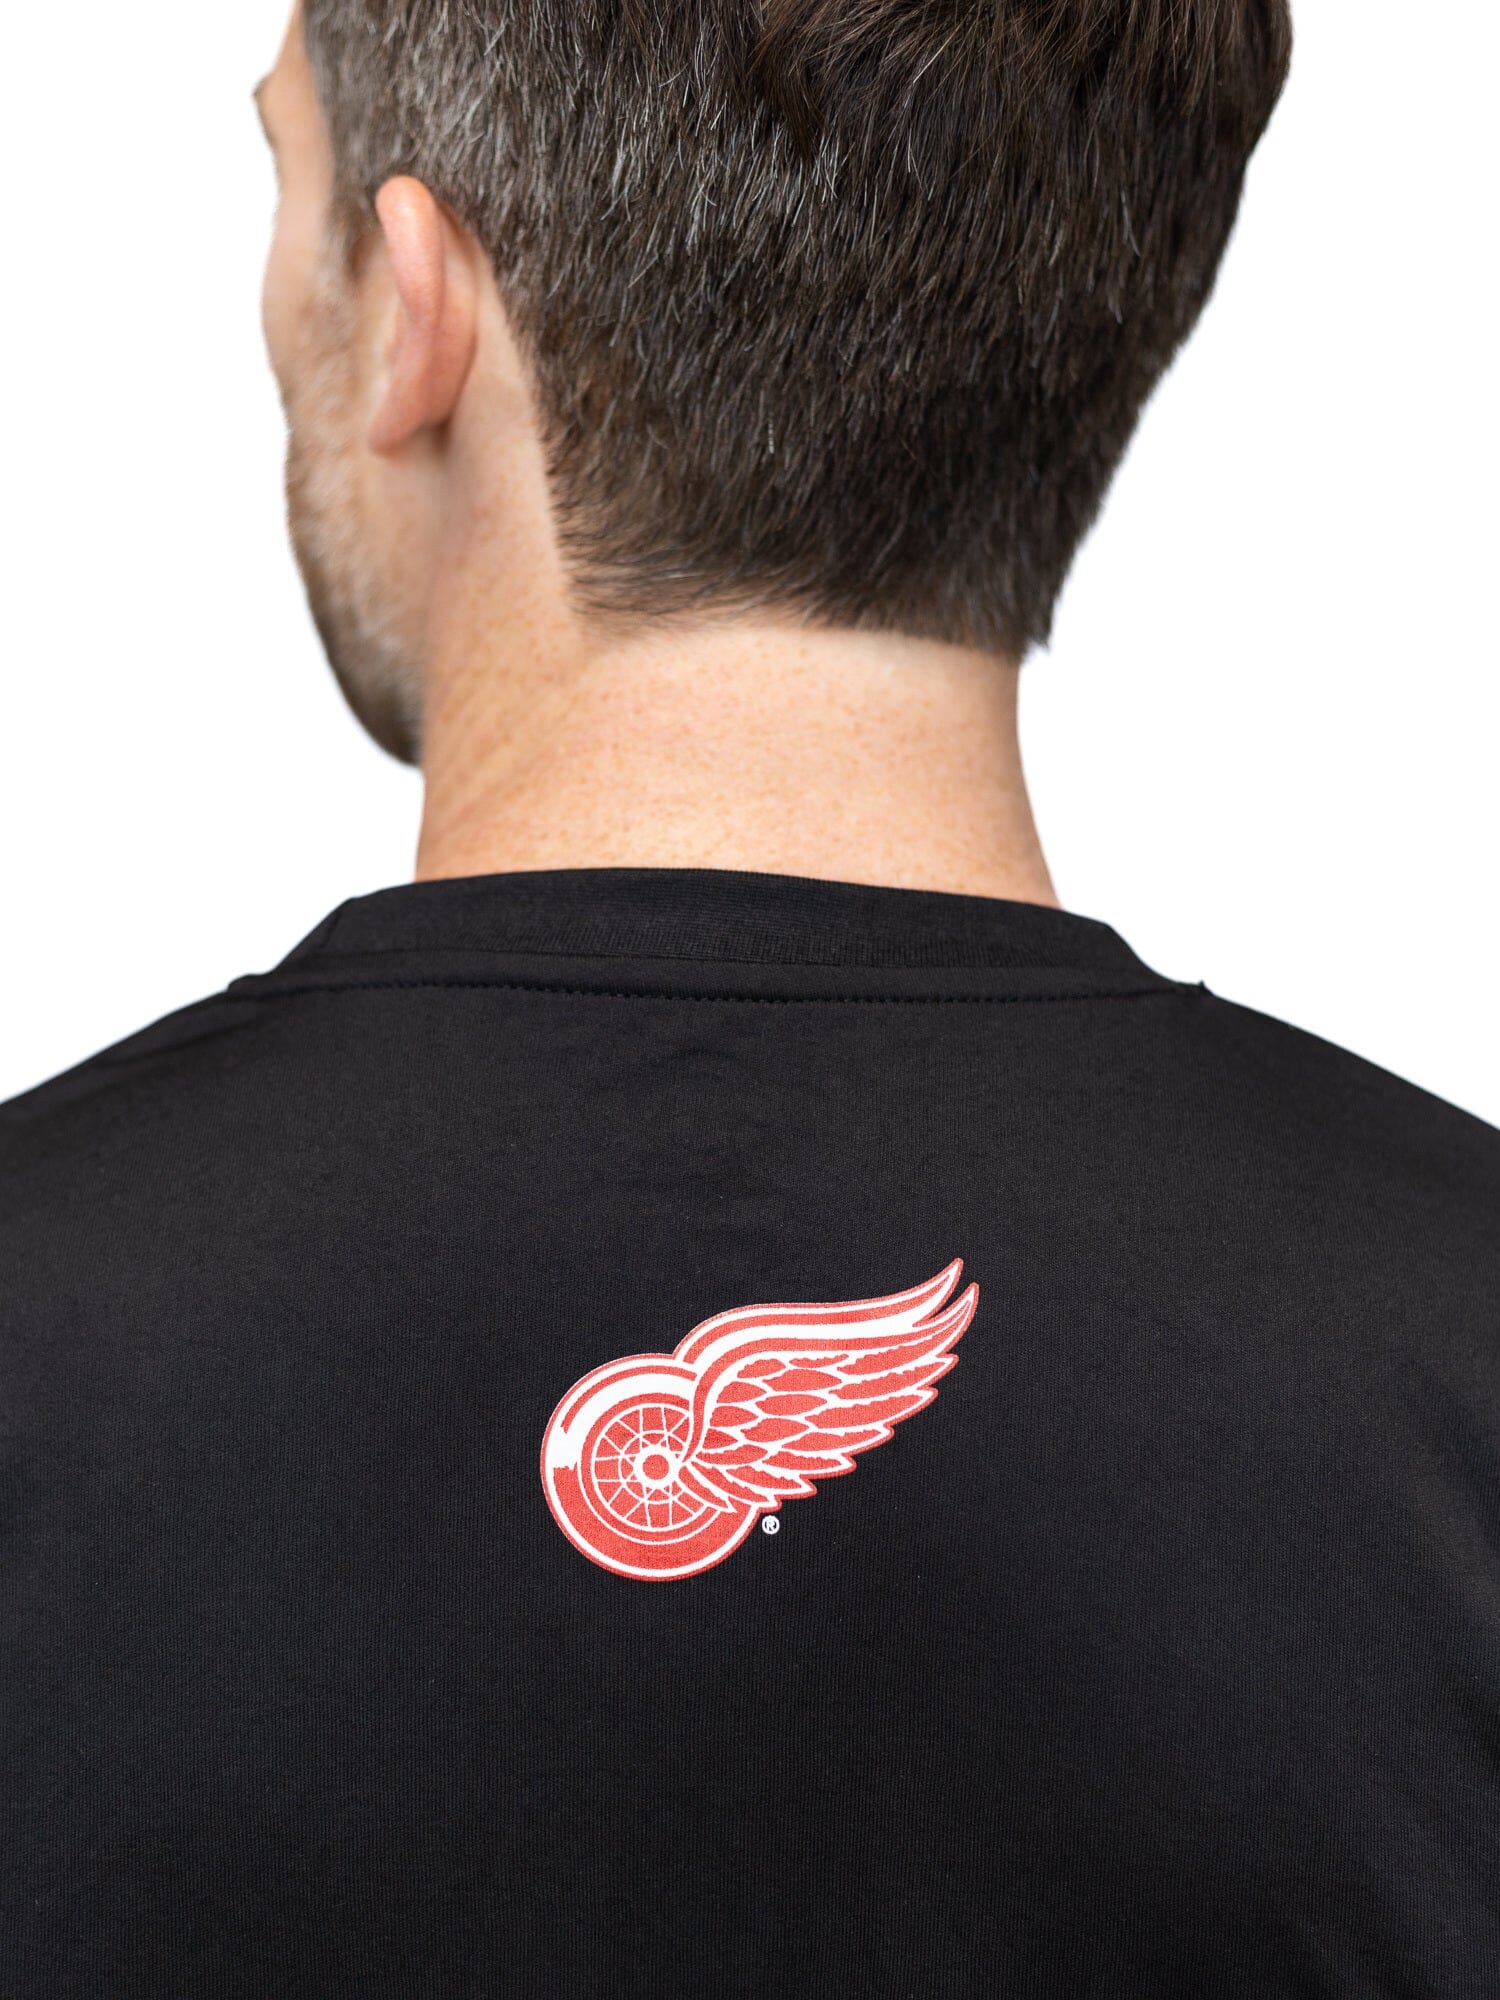 Detroit Red Wings "Full Fandom" Moisture Wicking T-Shirt T-Shirt BenchClearers 